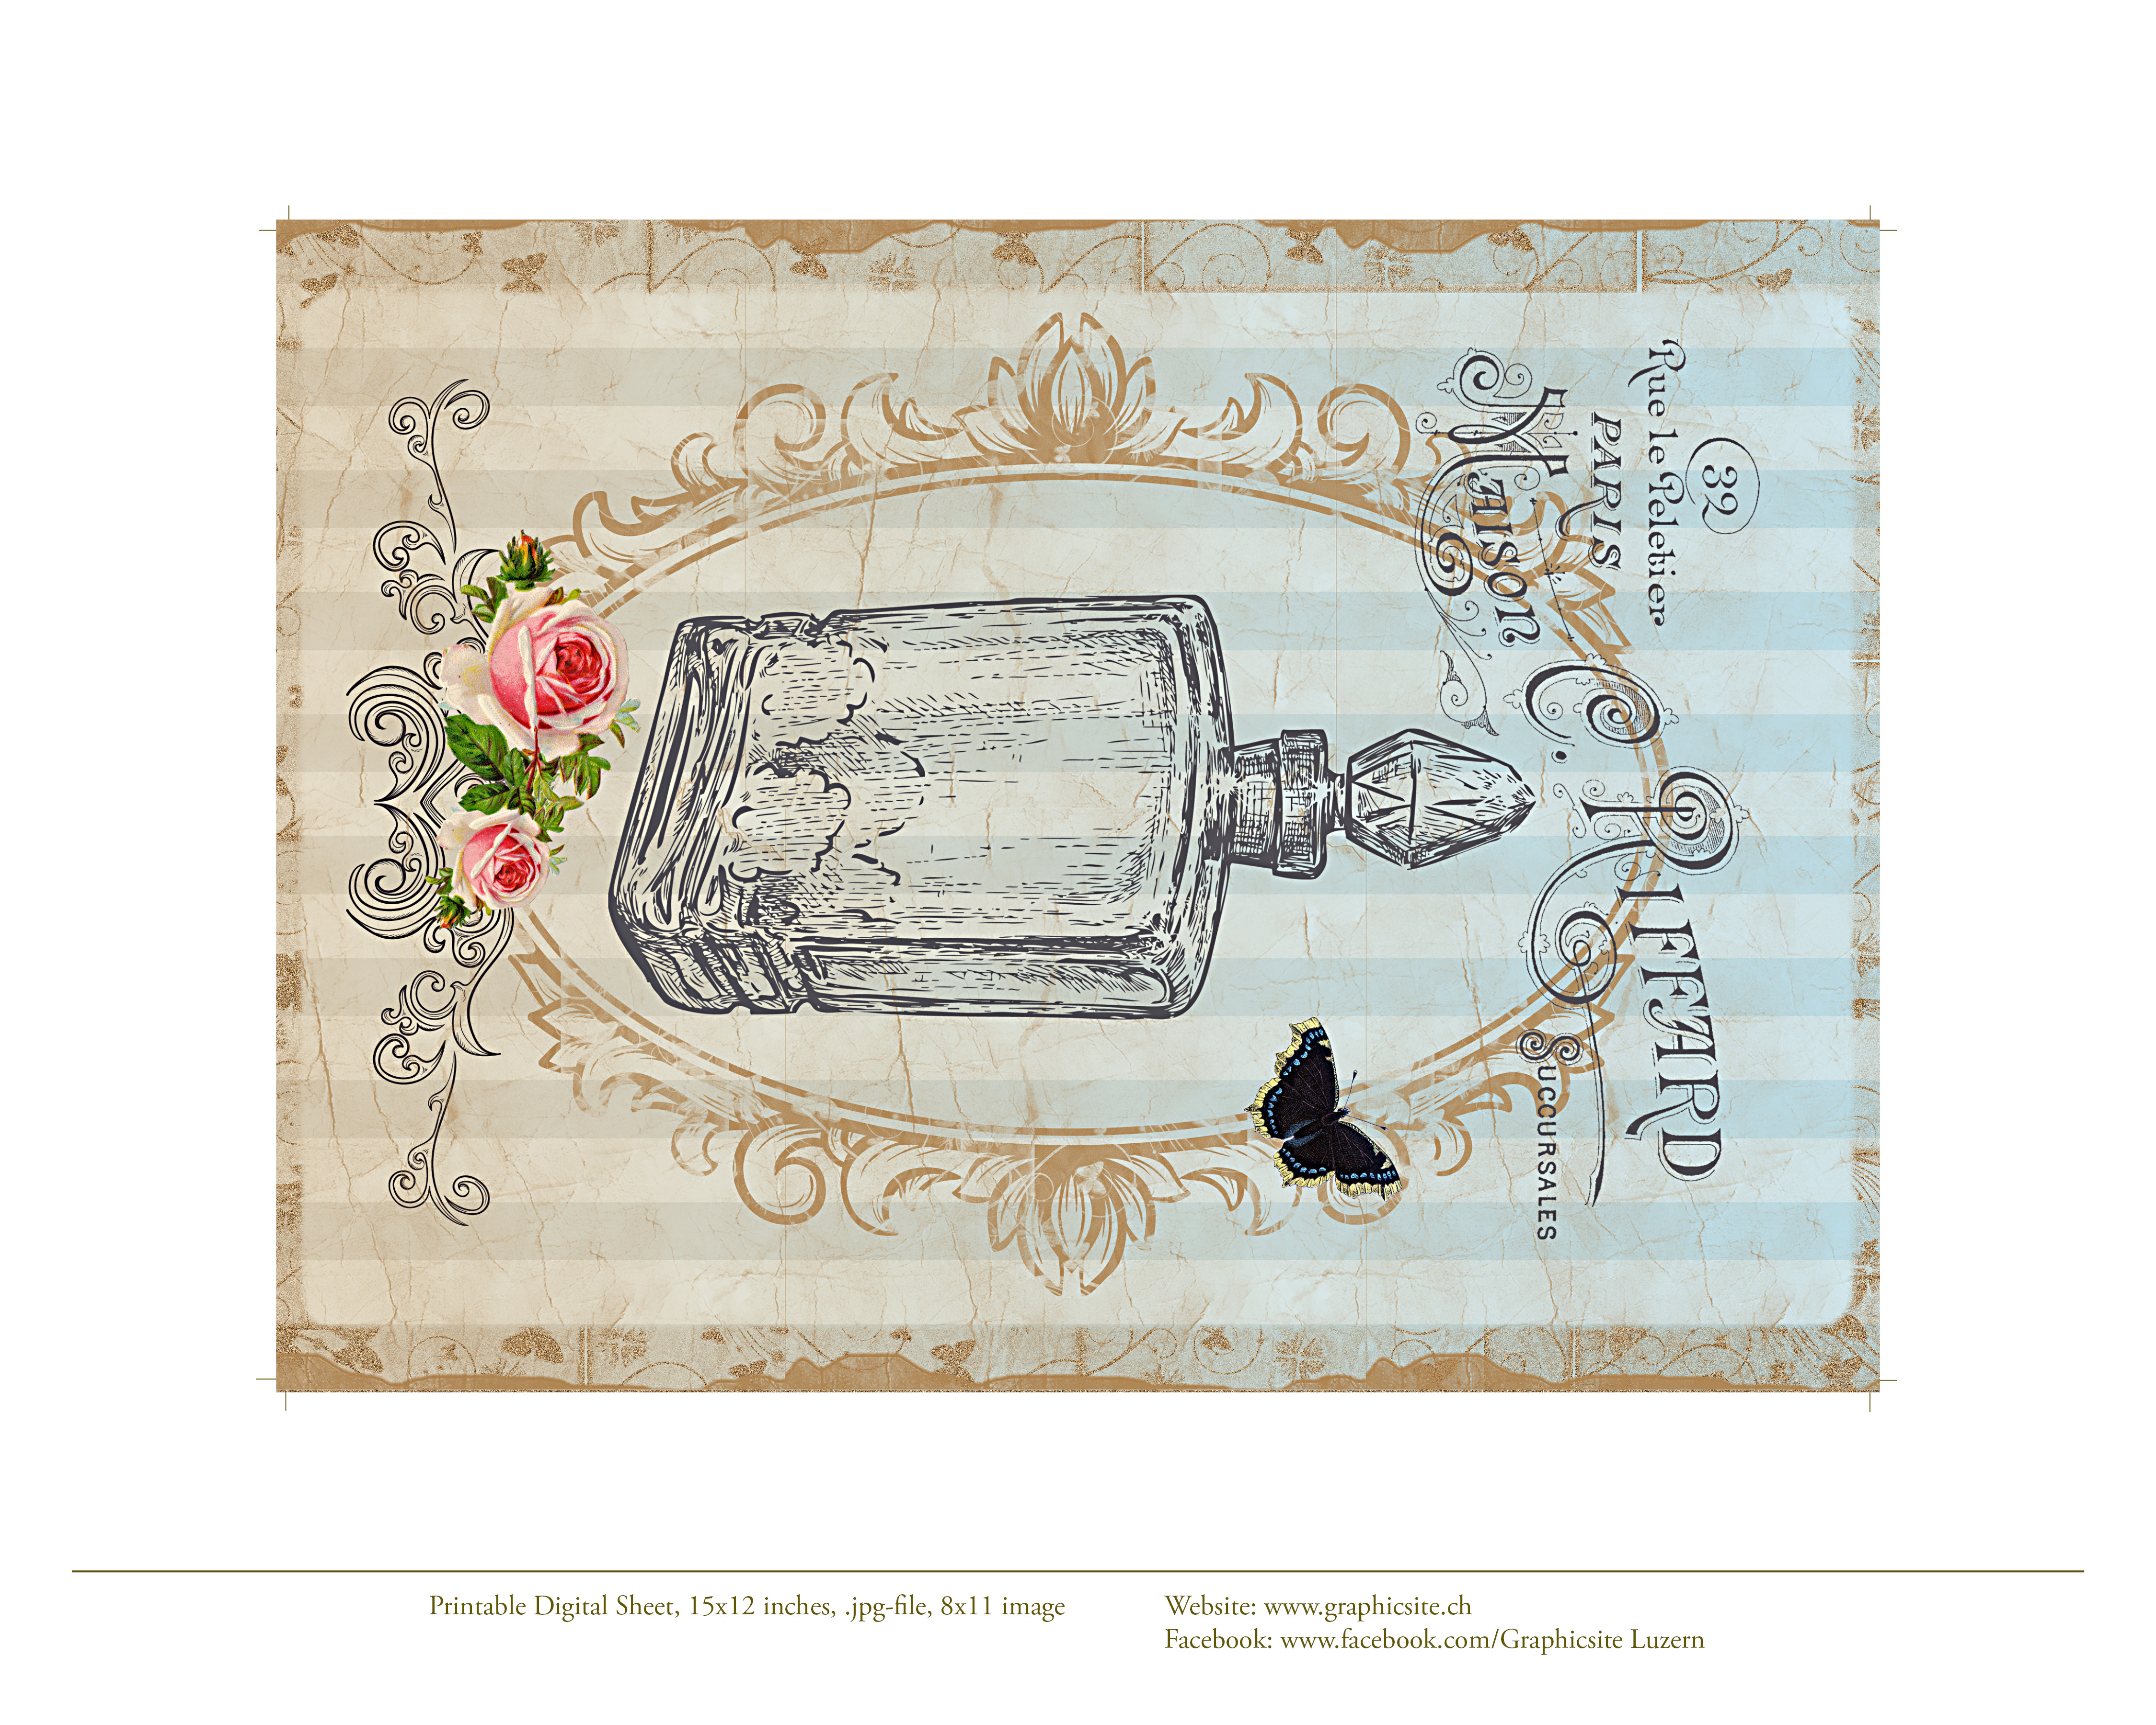 Printable Digital Sheet - 8x11 Images - Le Parfum I